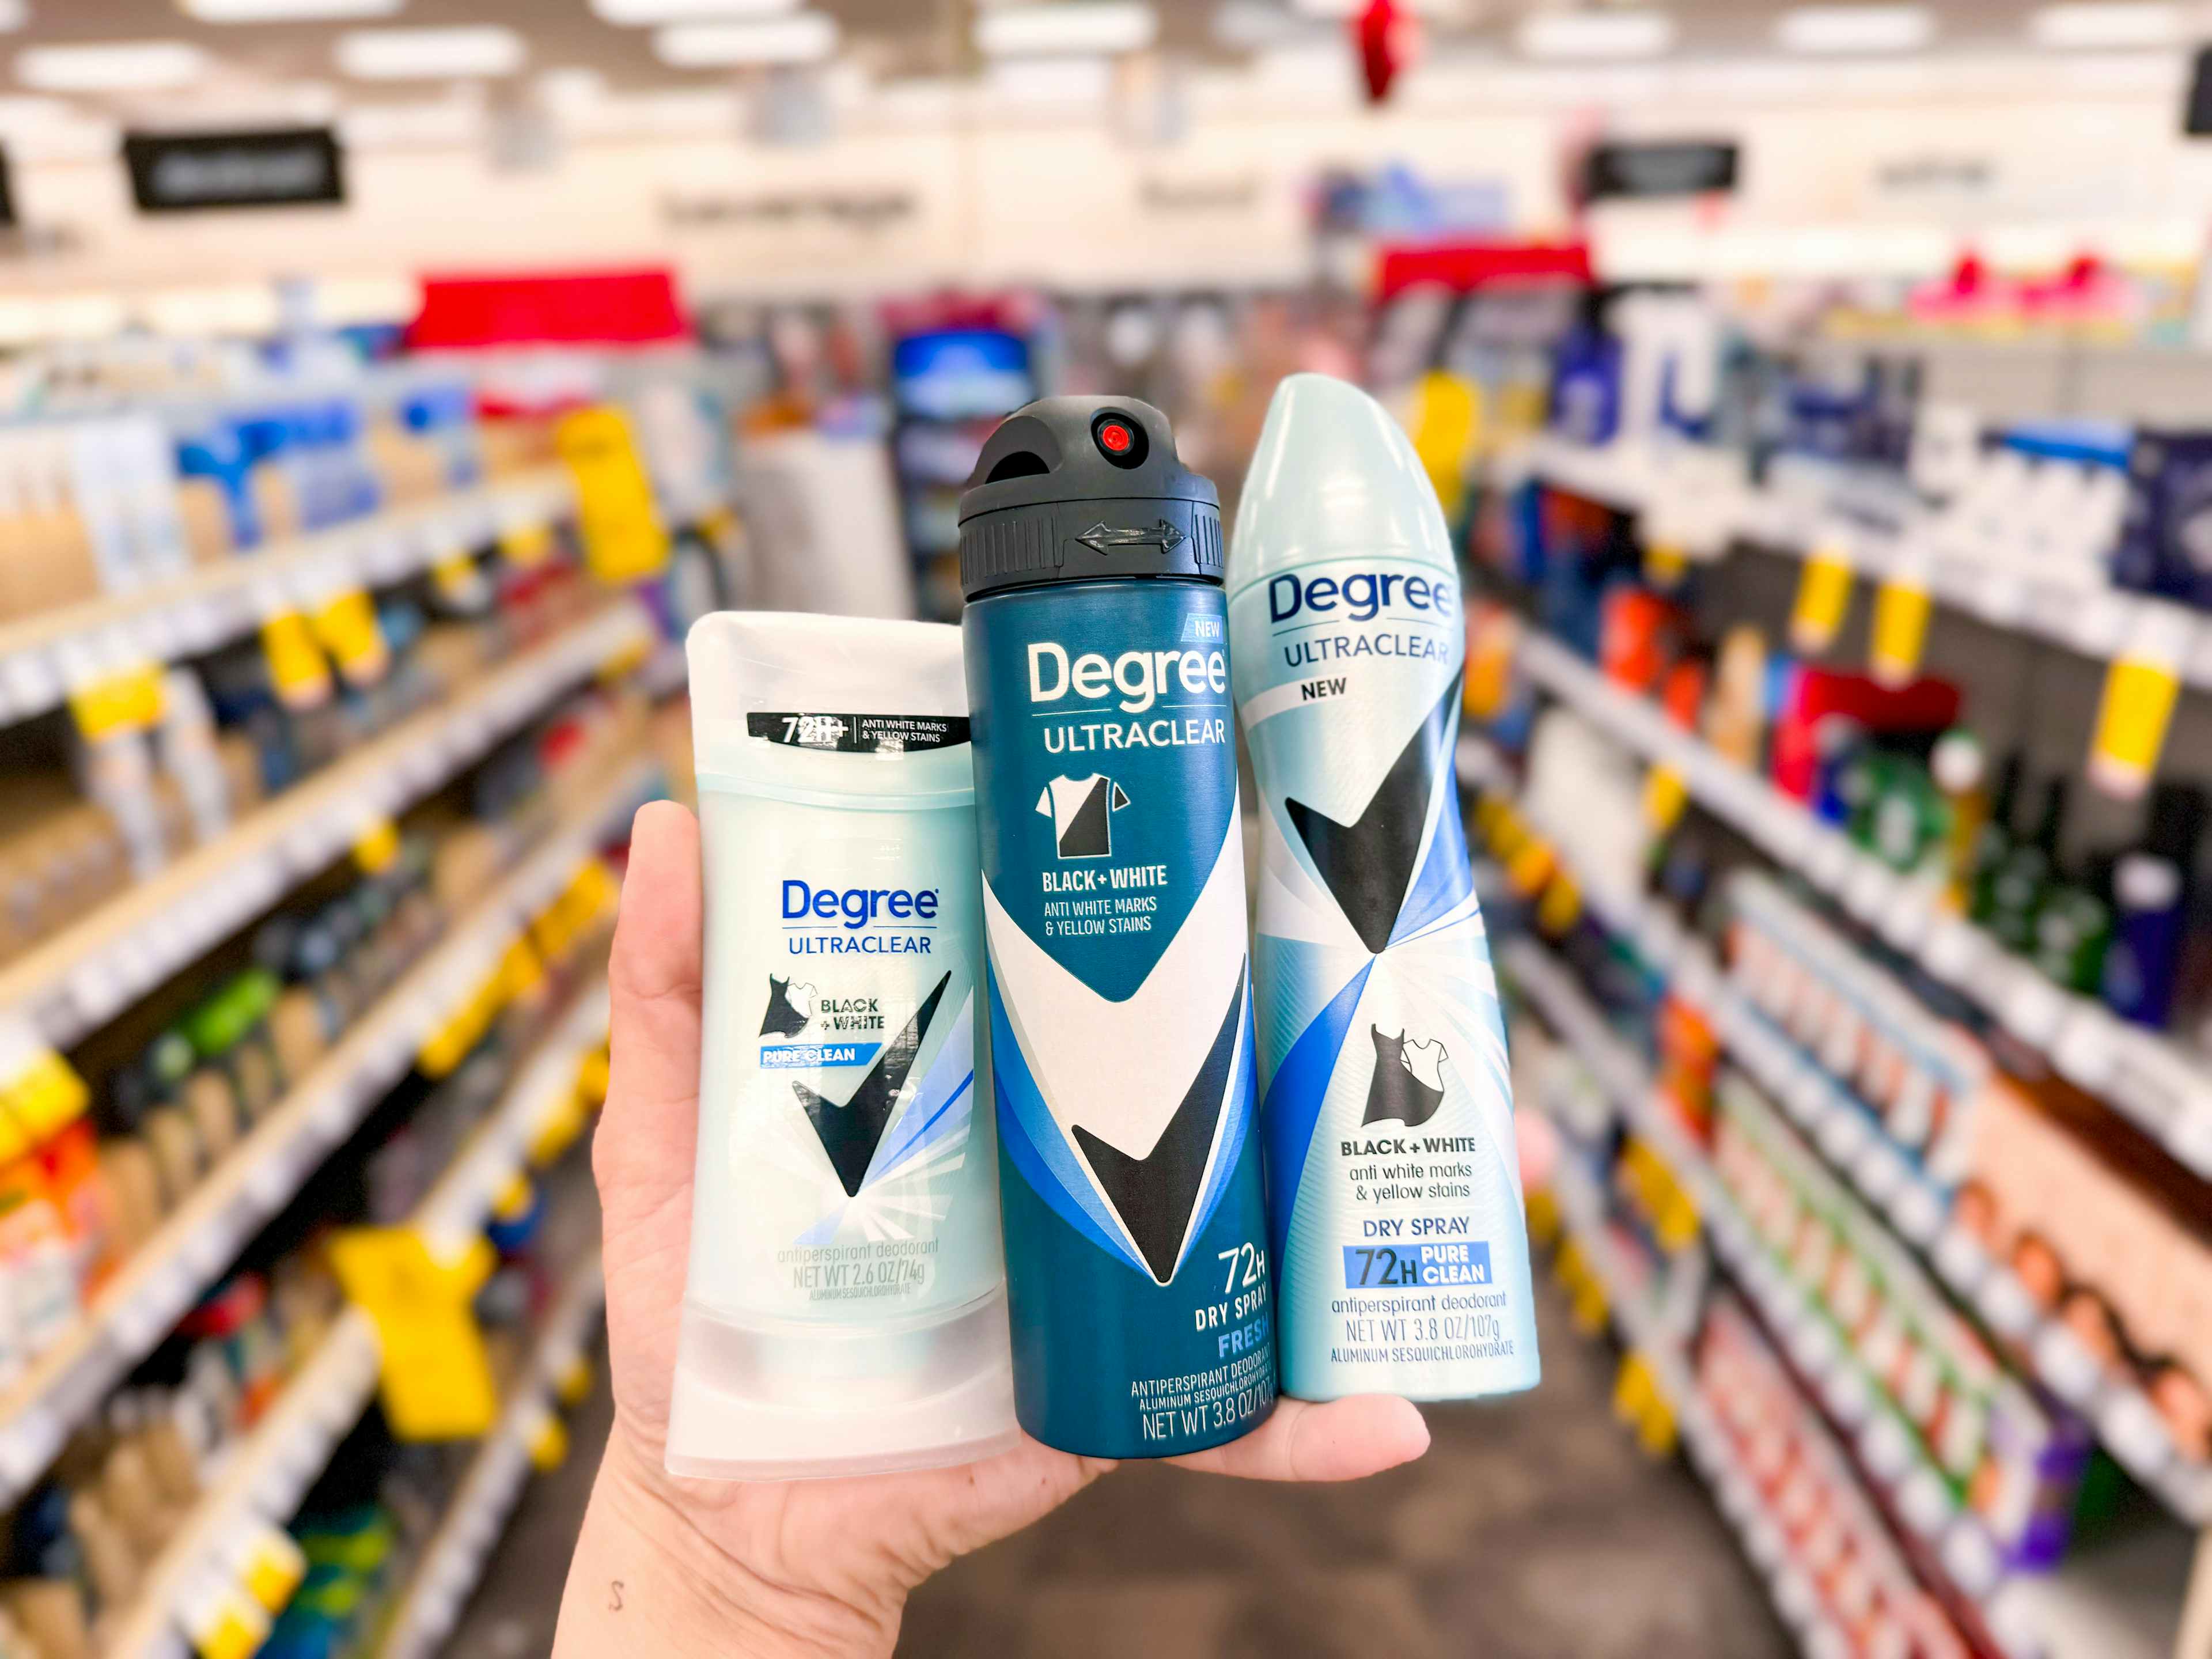 cvs-degree-ultraclear-dry-spray-deodorant-5